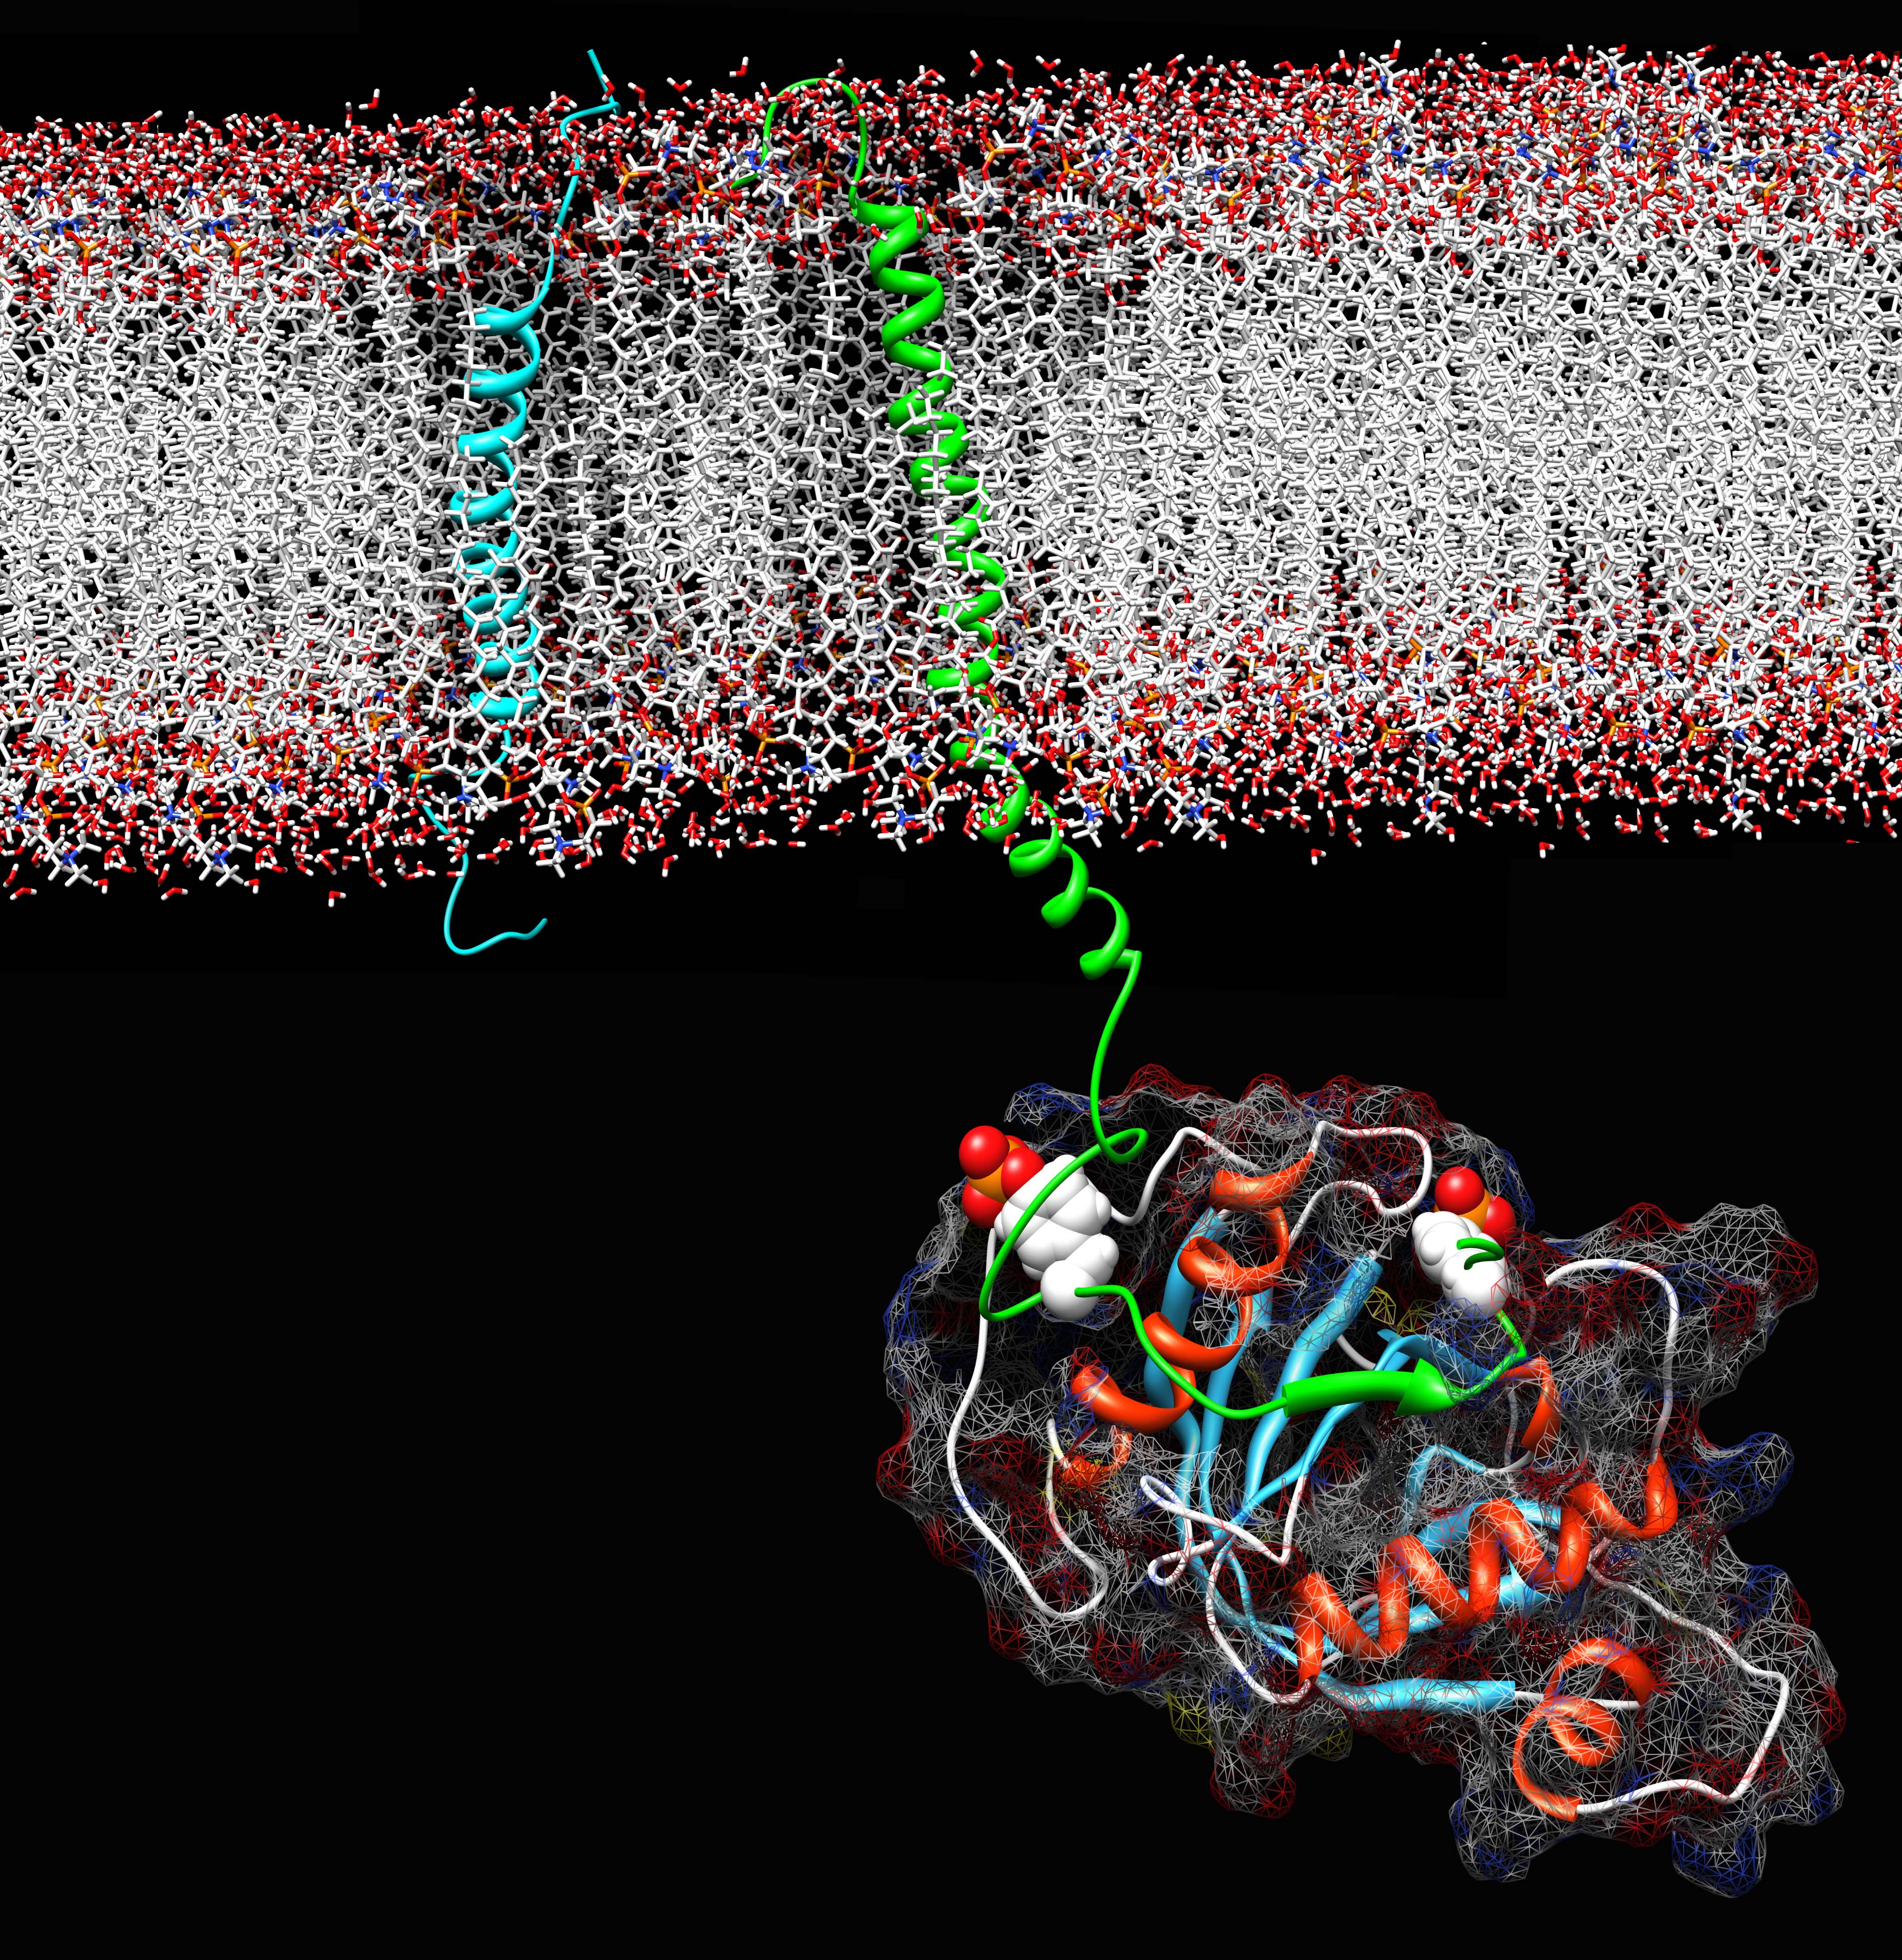 Shc PTB domain at membrane interface